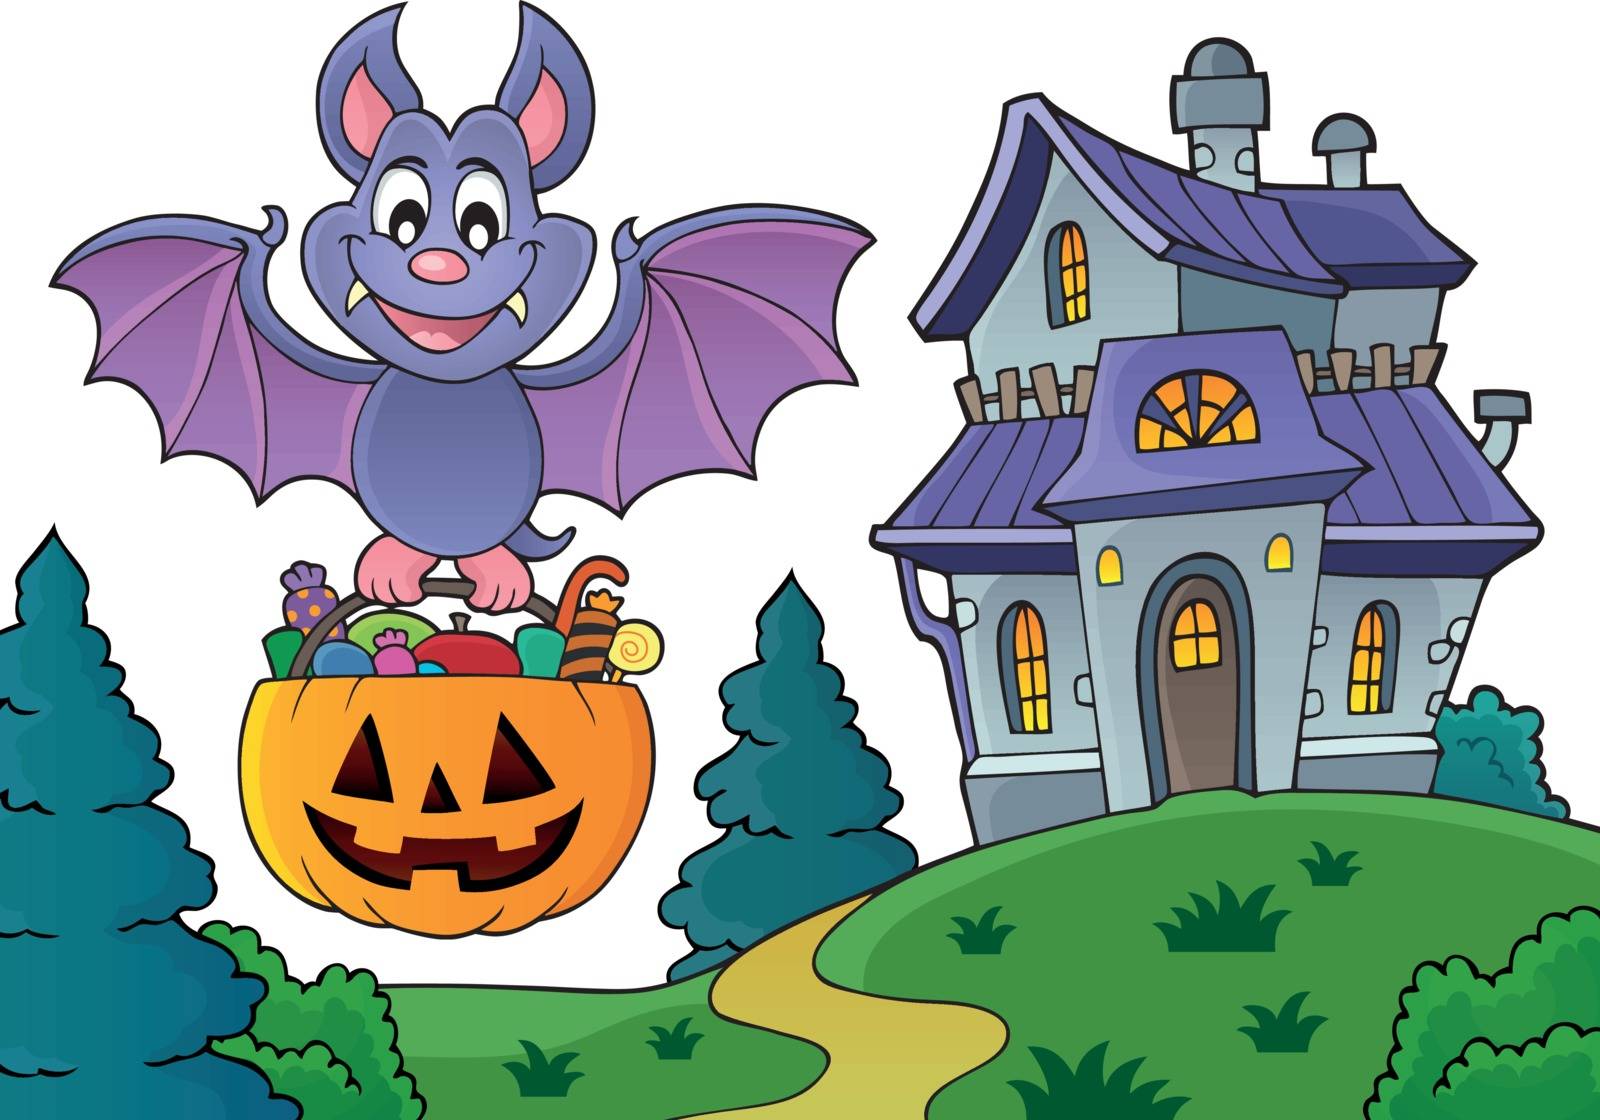 Halloween bat theme image 5 - eps10 vector illustration.